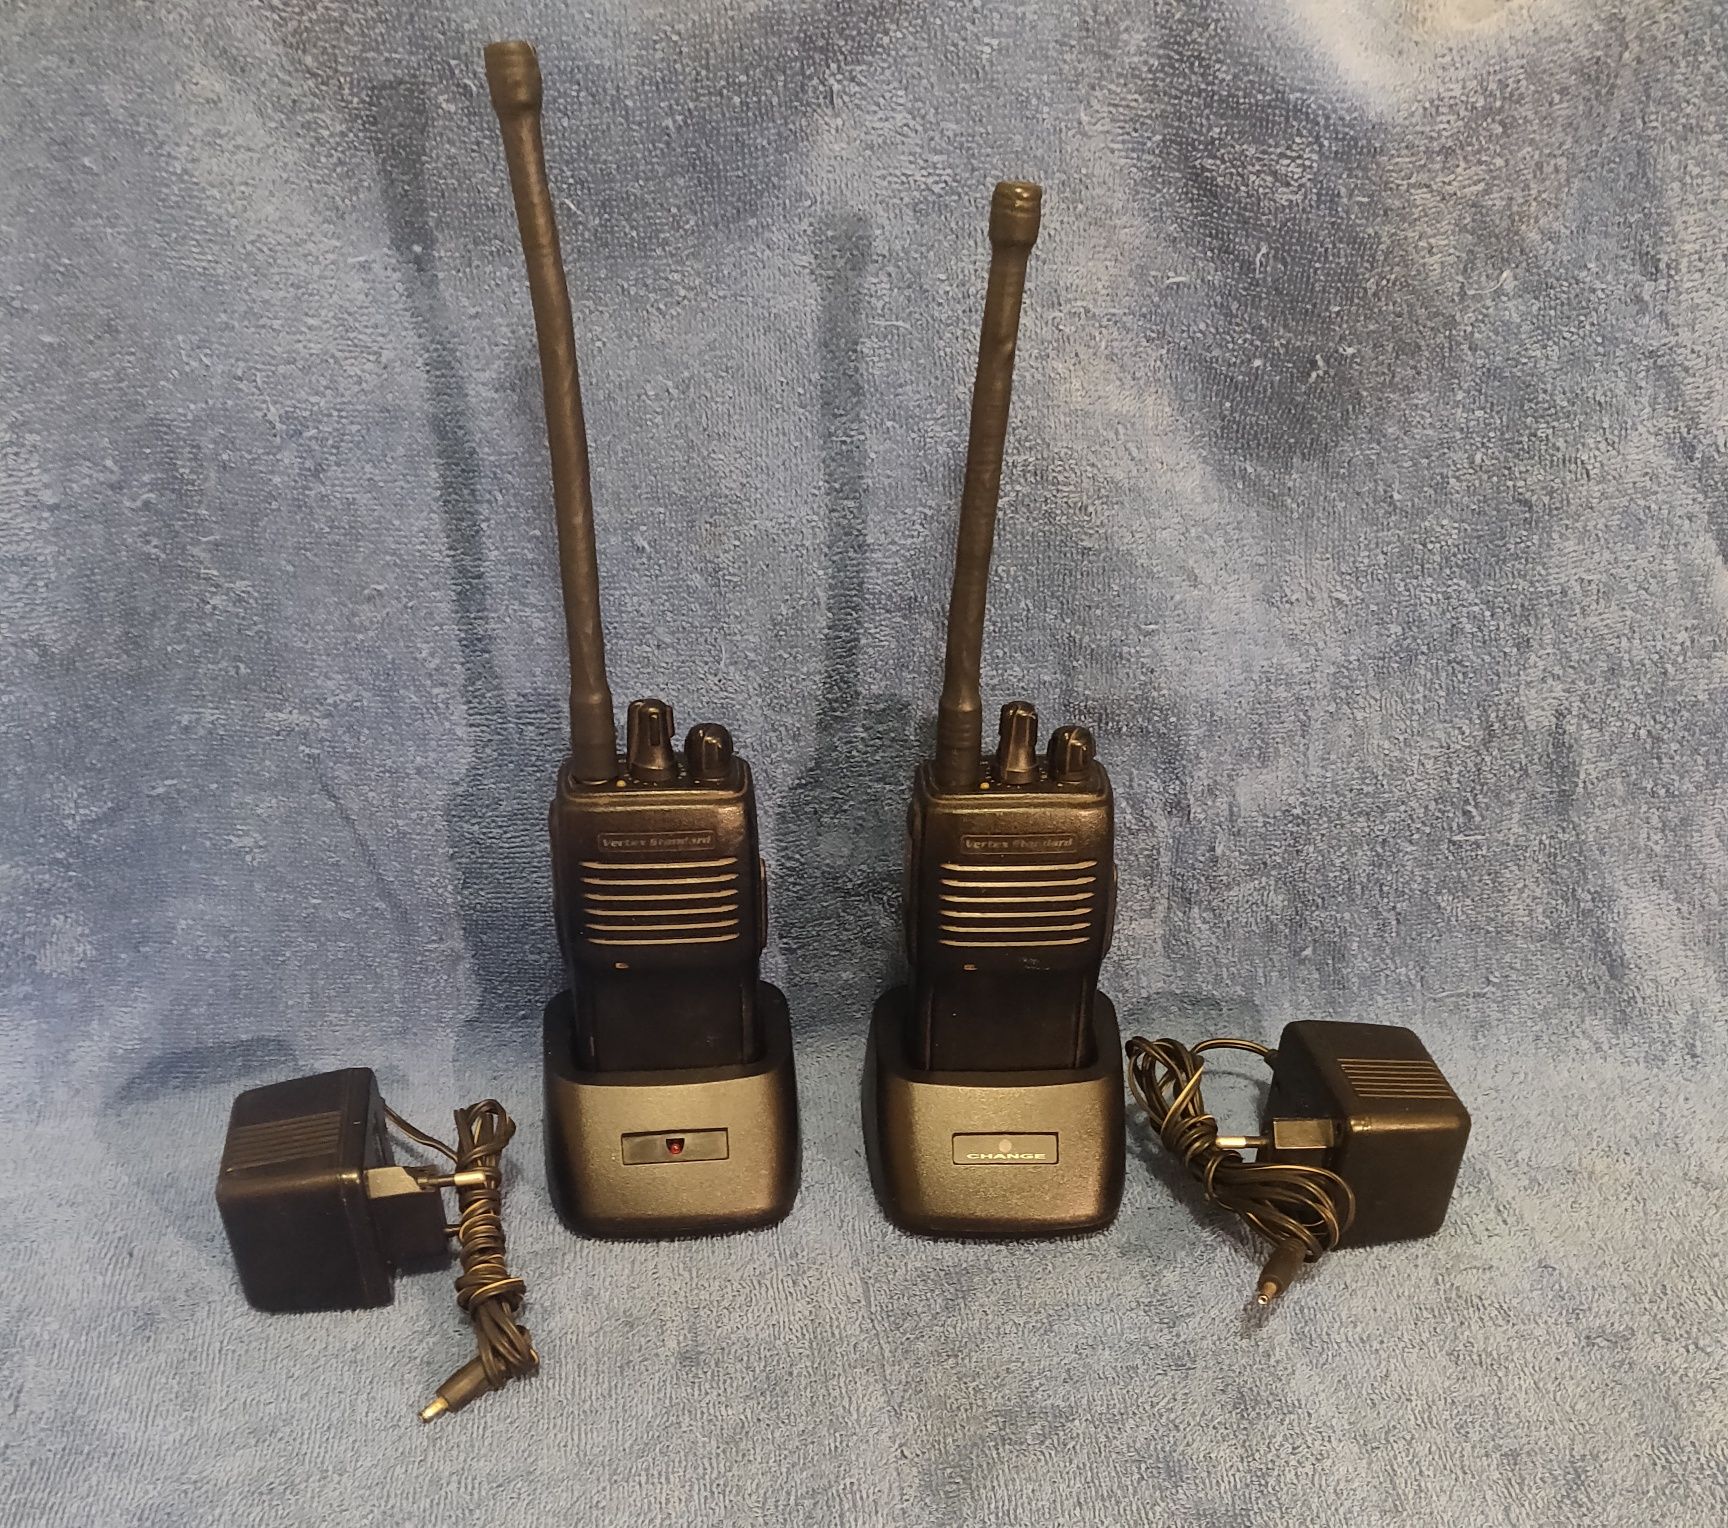 Две радиостанции vortex vx160v VHF 134-174 MHz